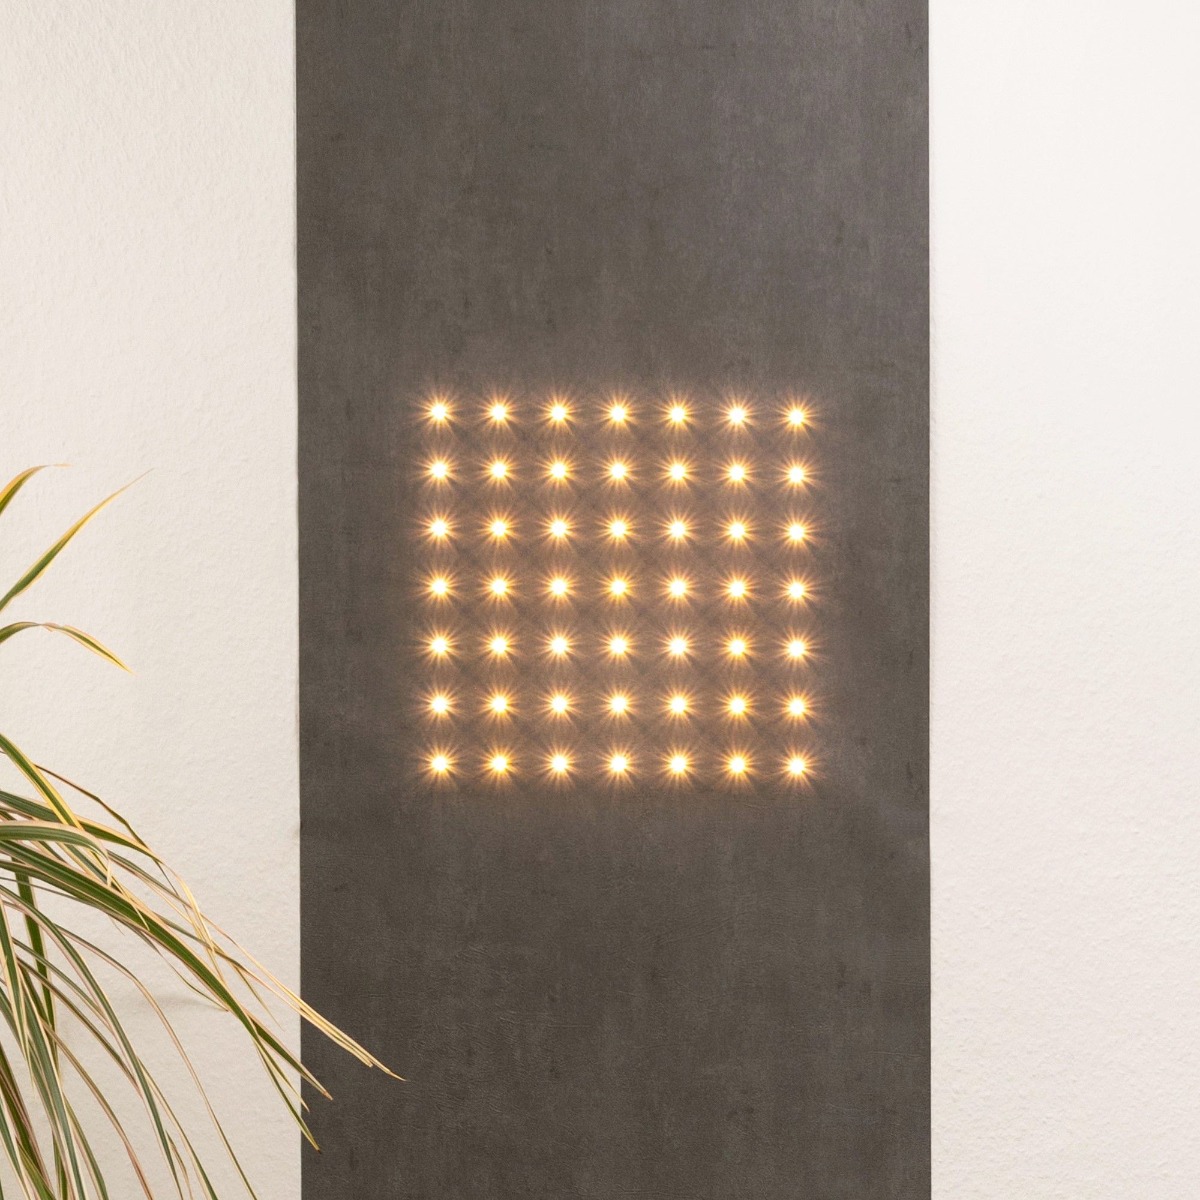 Marburger LED Wallpaper SUN 2.8x0.53m 49 LEDs warm white 2700K 350lm Grey decor app-controlled